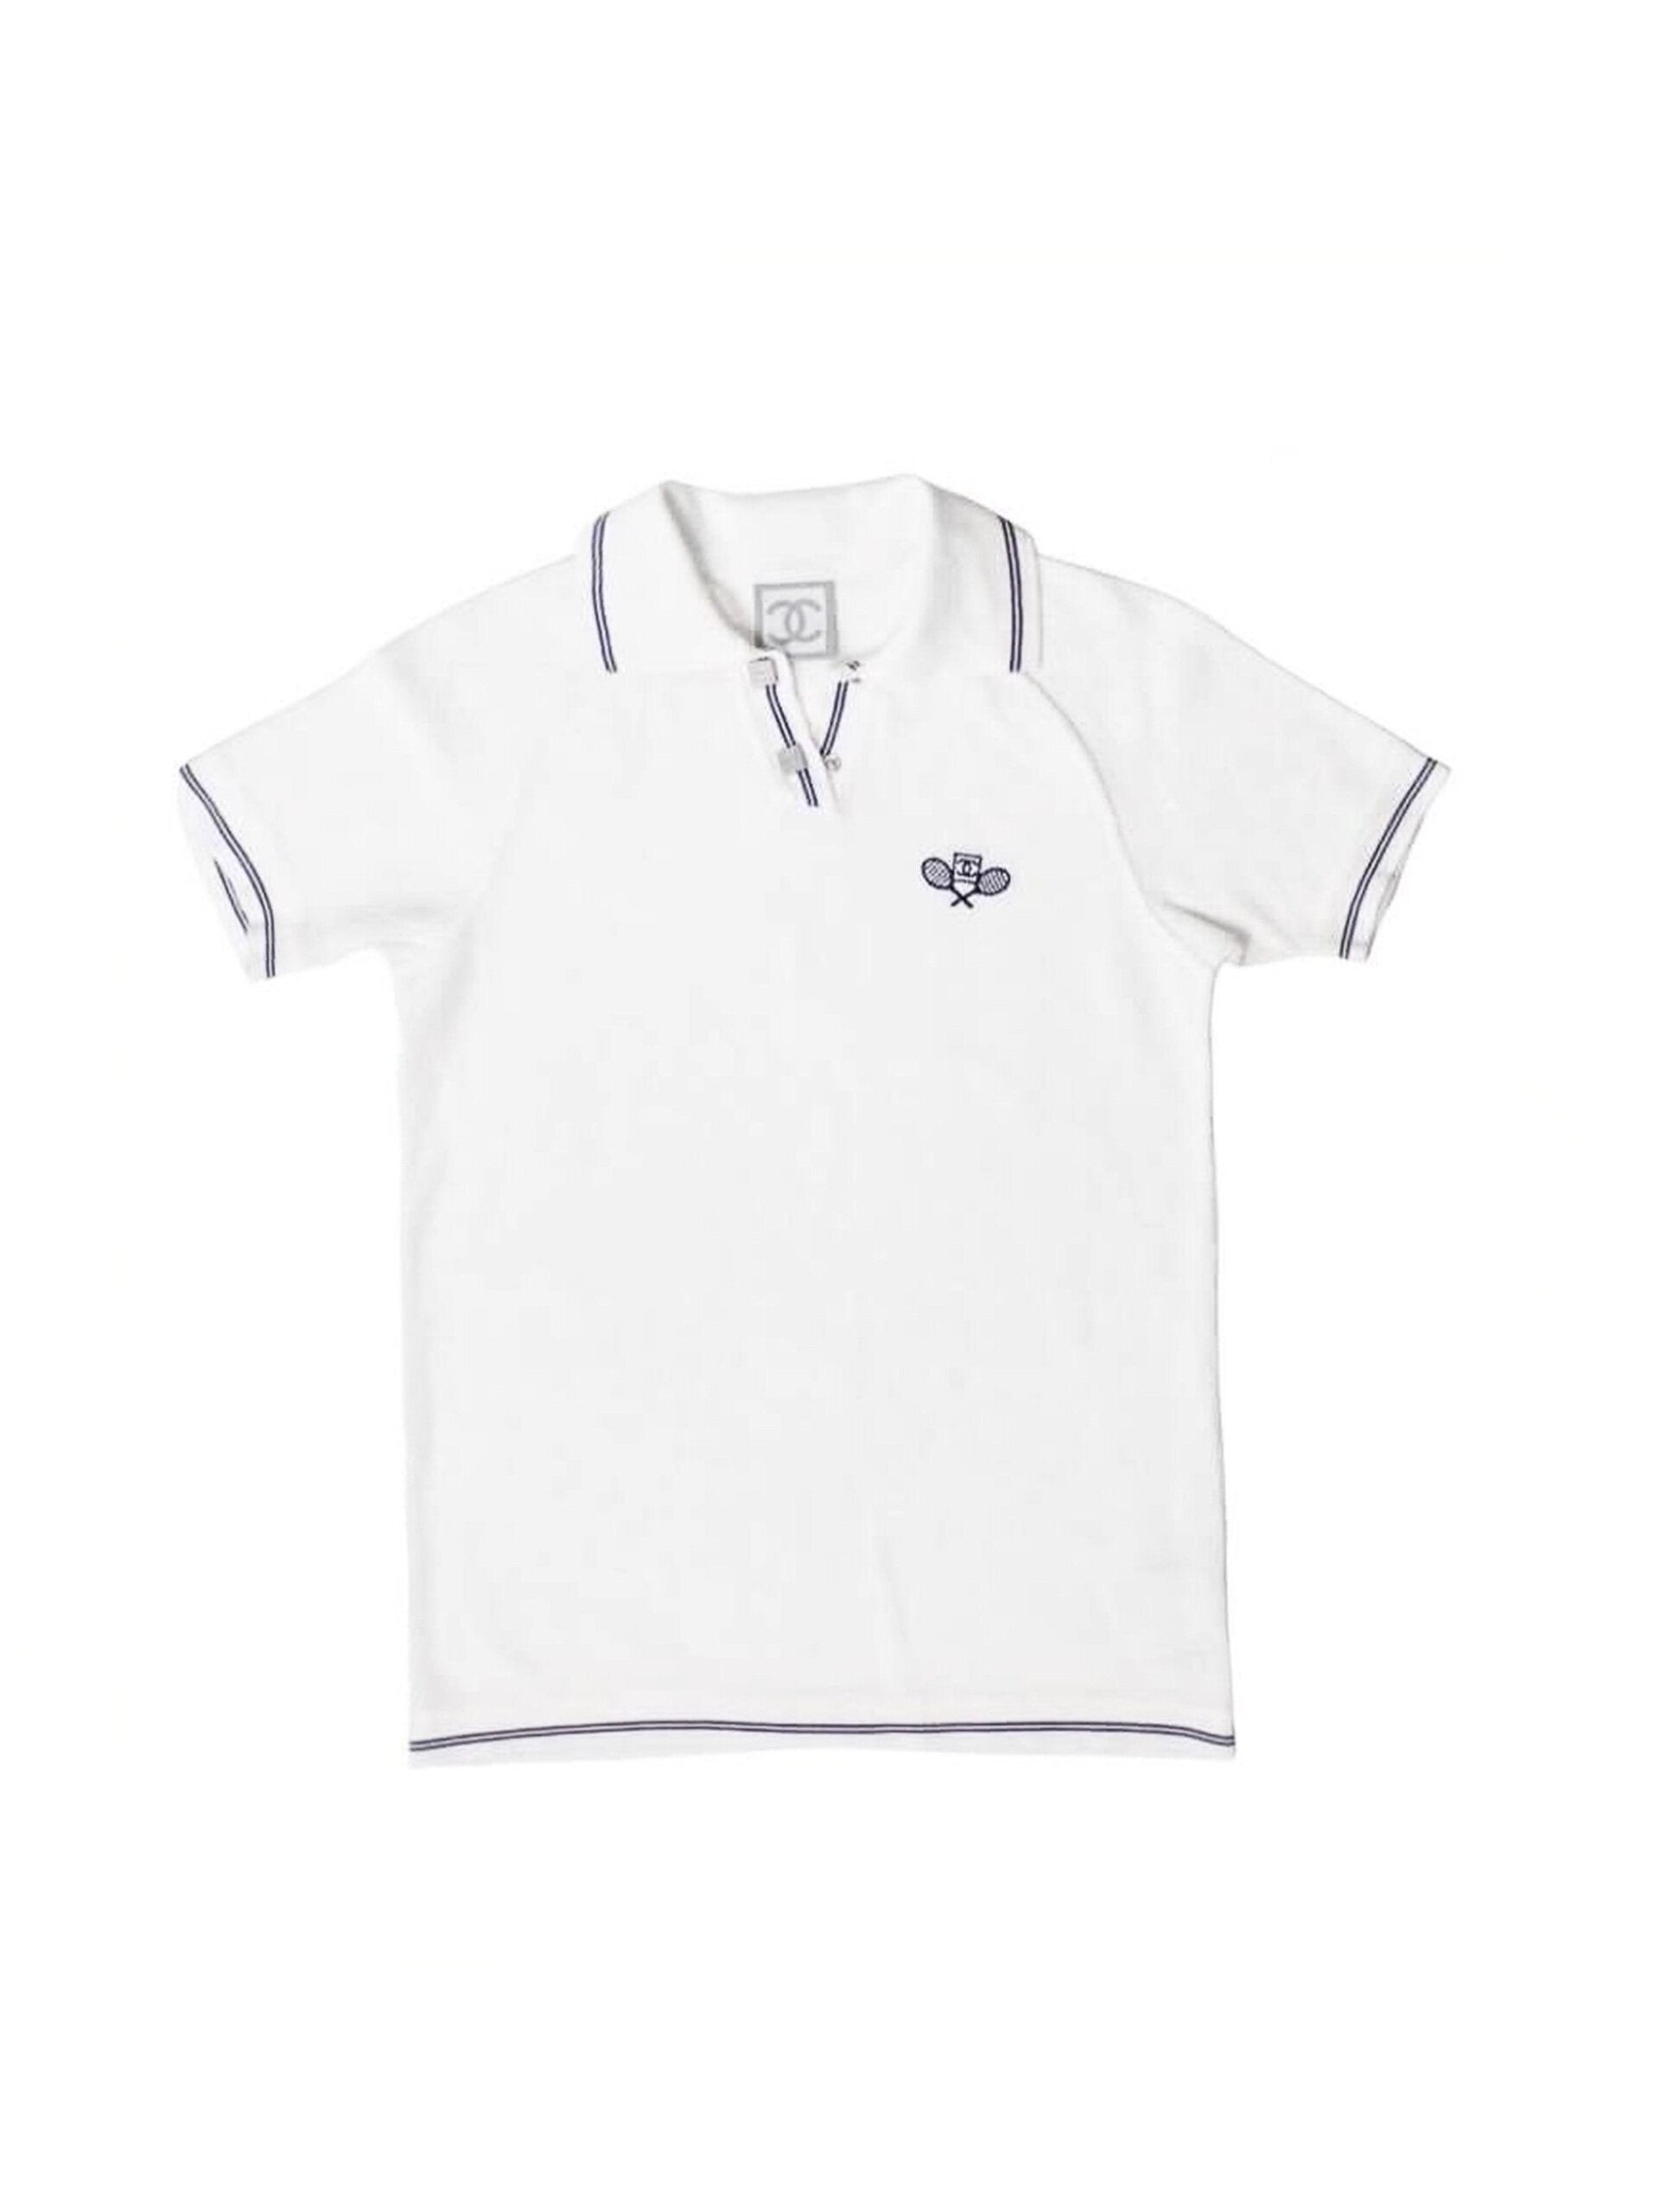 Chanel Sports White Tennis Shirt